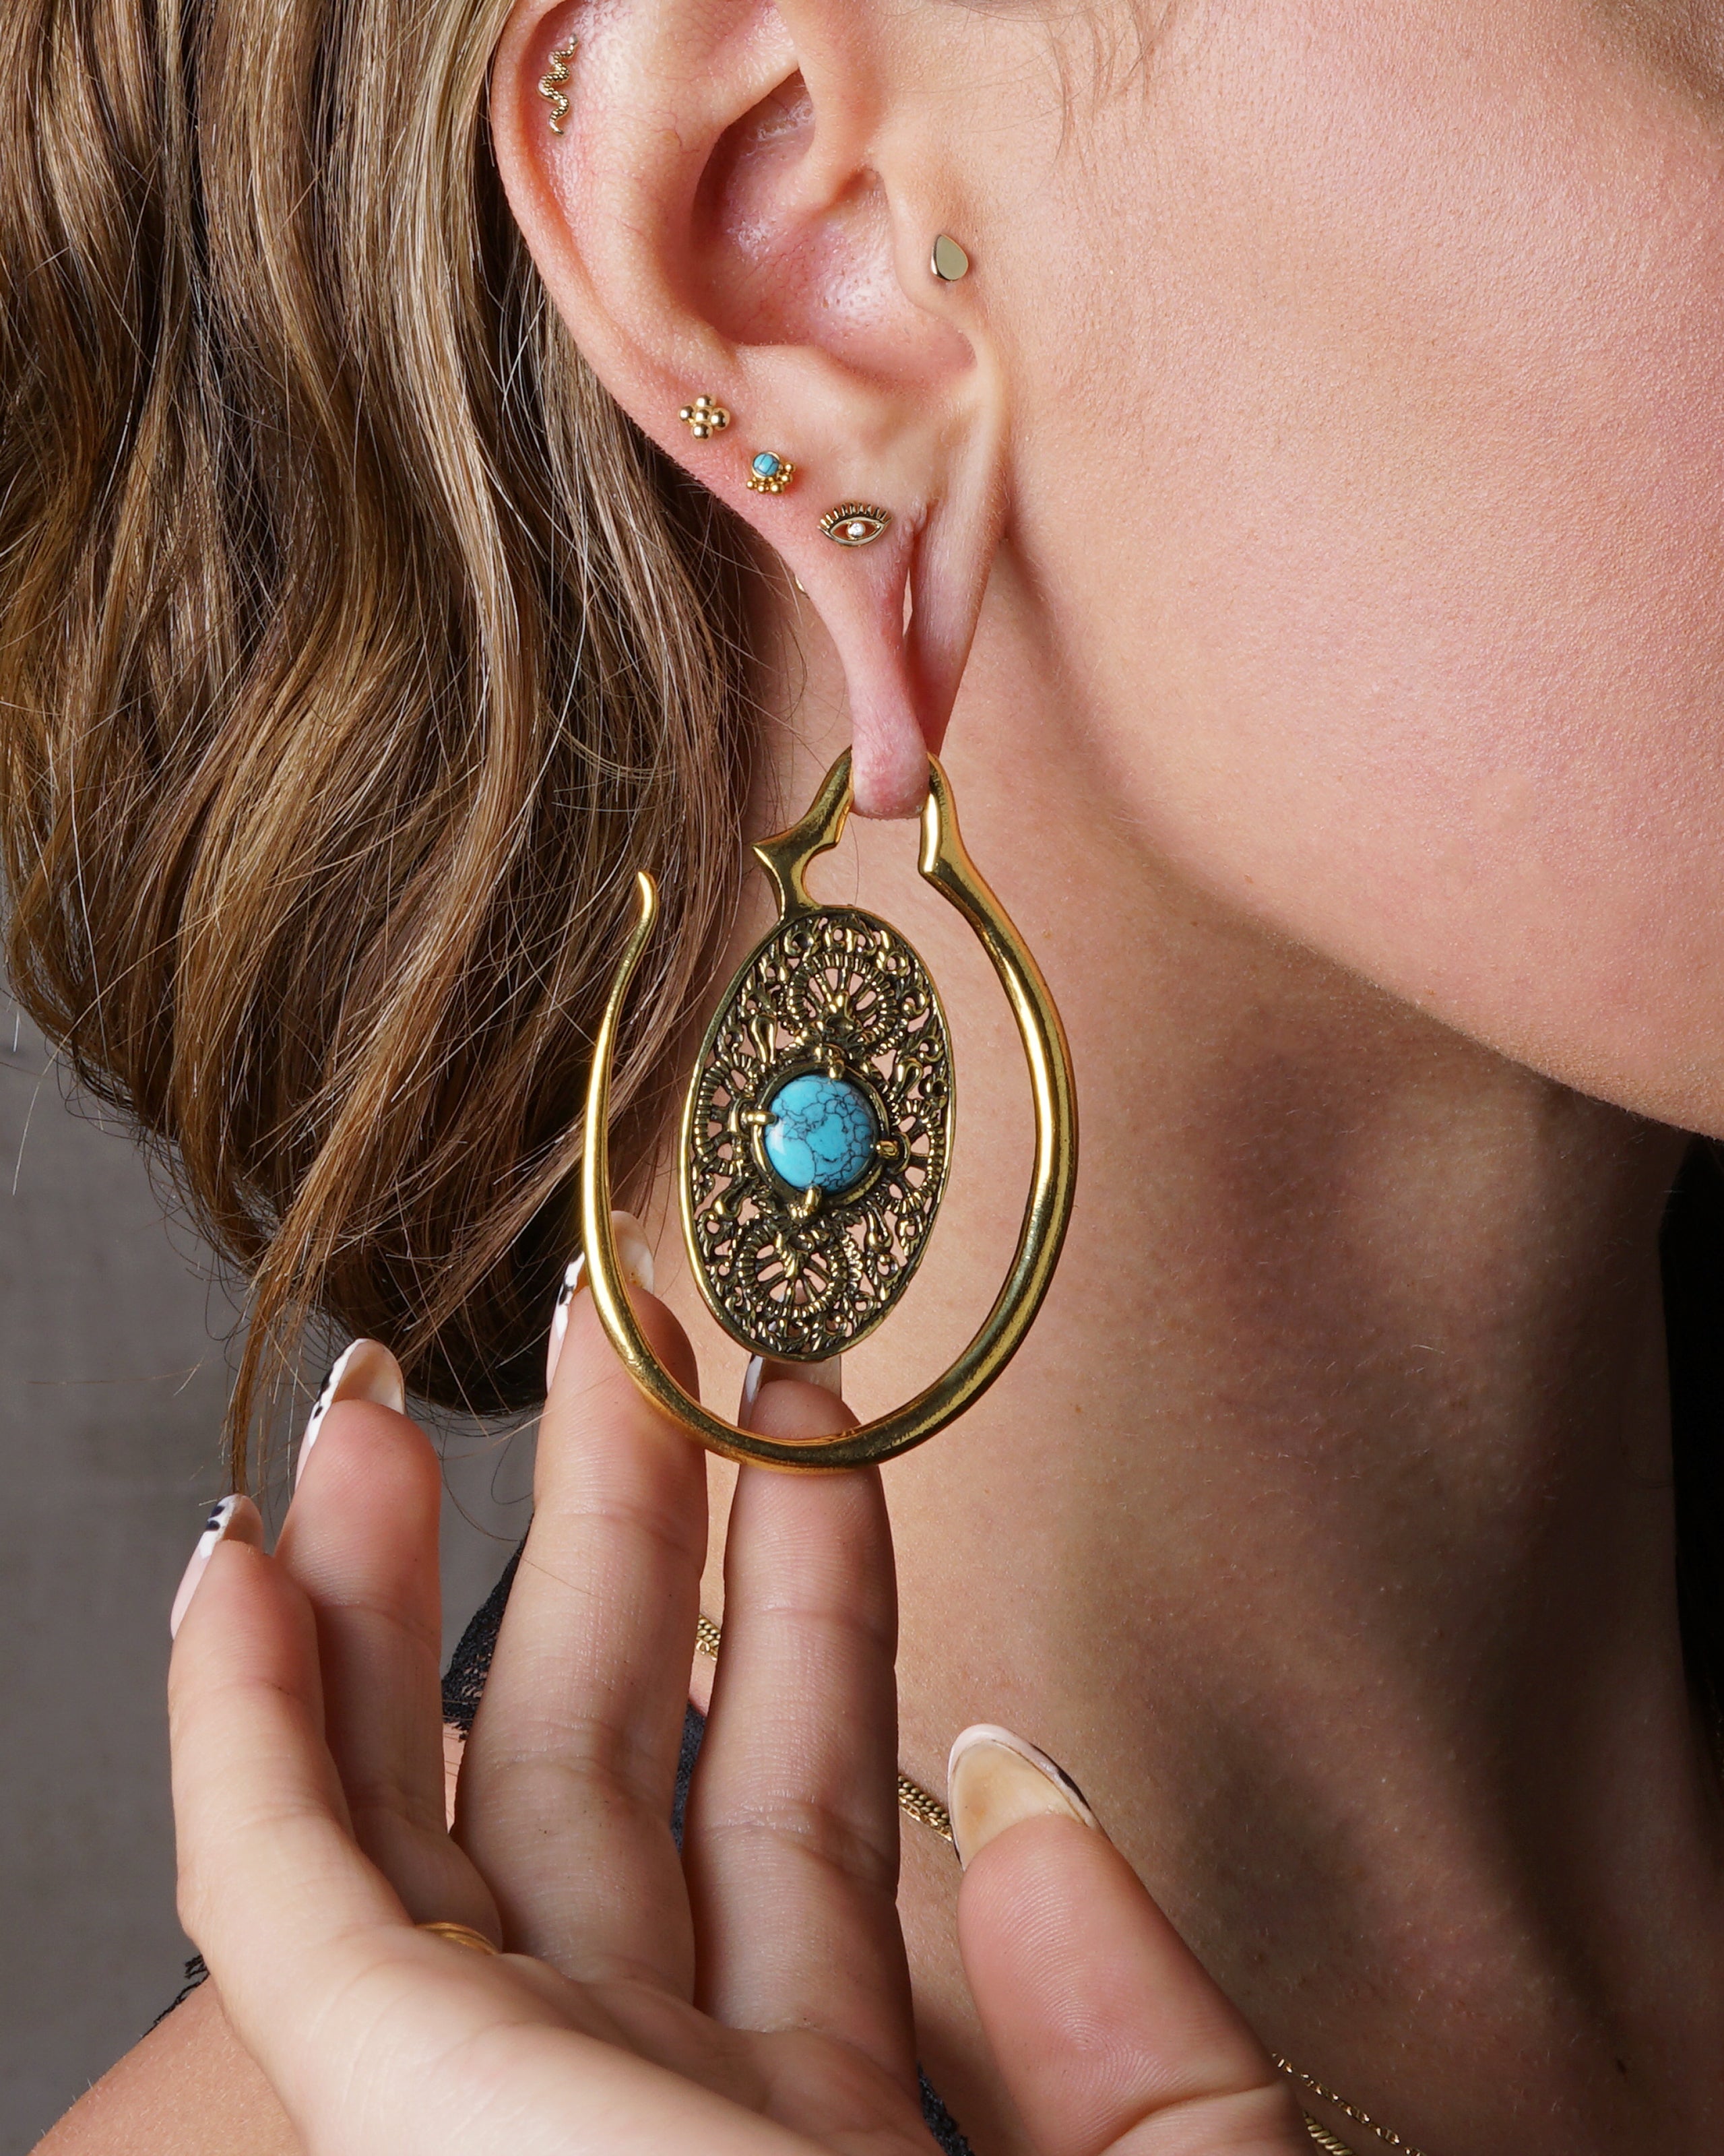 model wearing 14k Gold internally threaded screw back earring 1.2mm (16g), 8mm, dots flower labret stud on her upper lobe